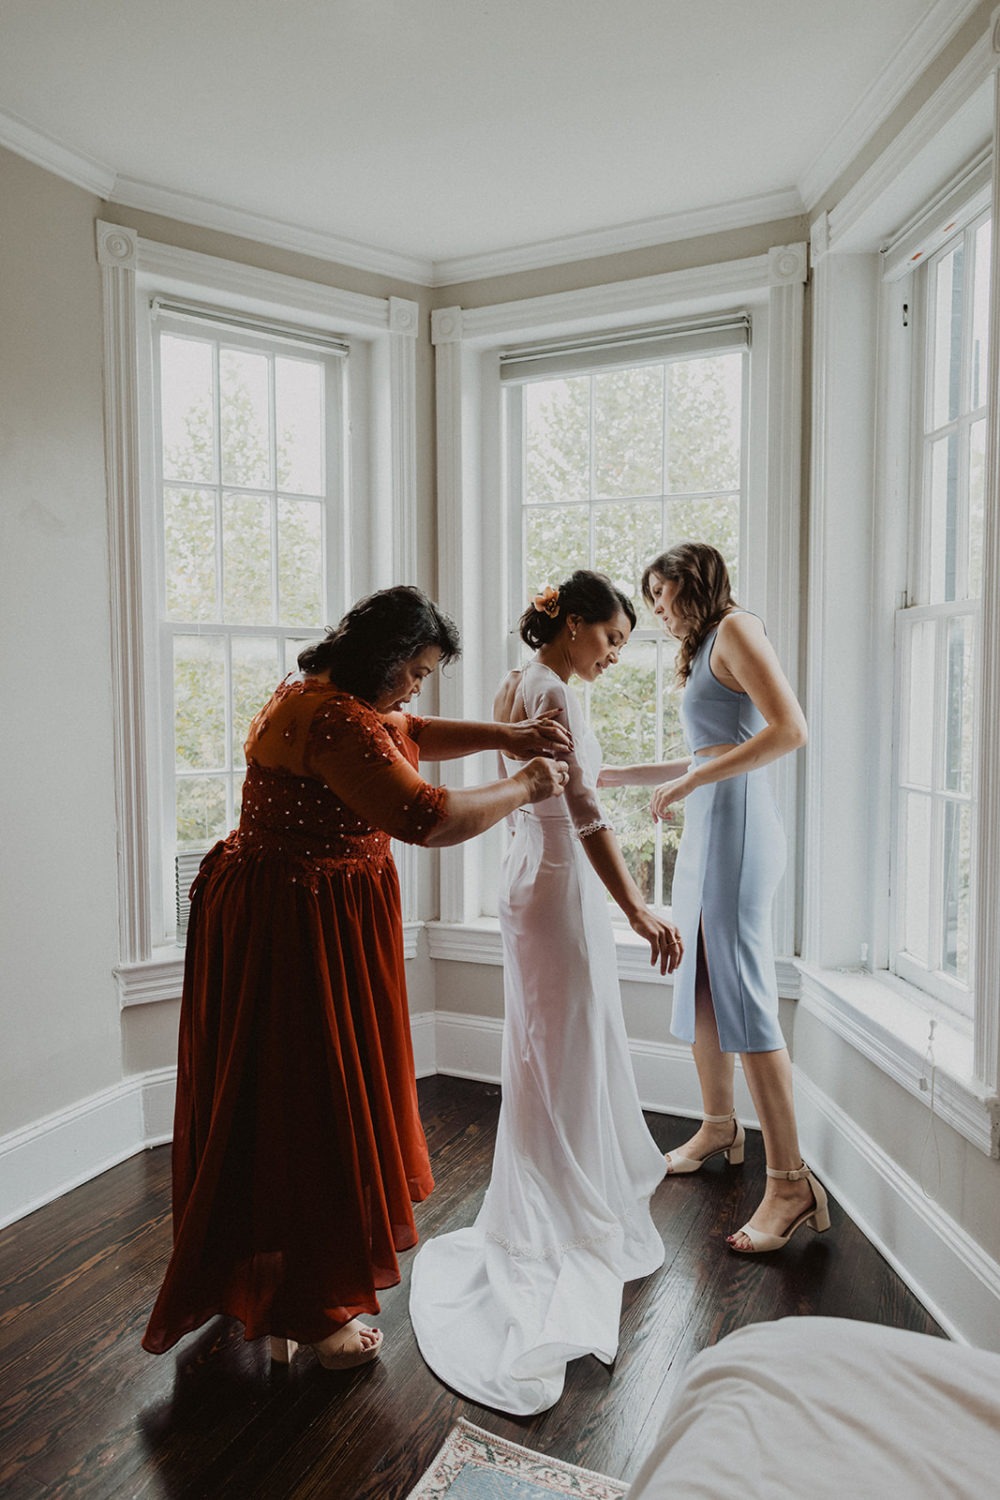 mother of bride helps bride get dressed in wedding dress